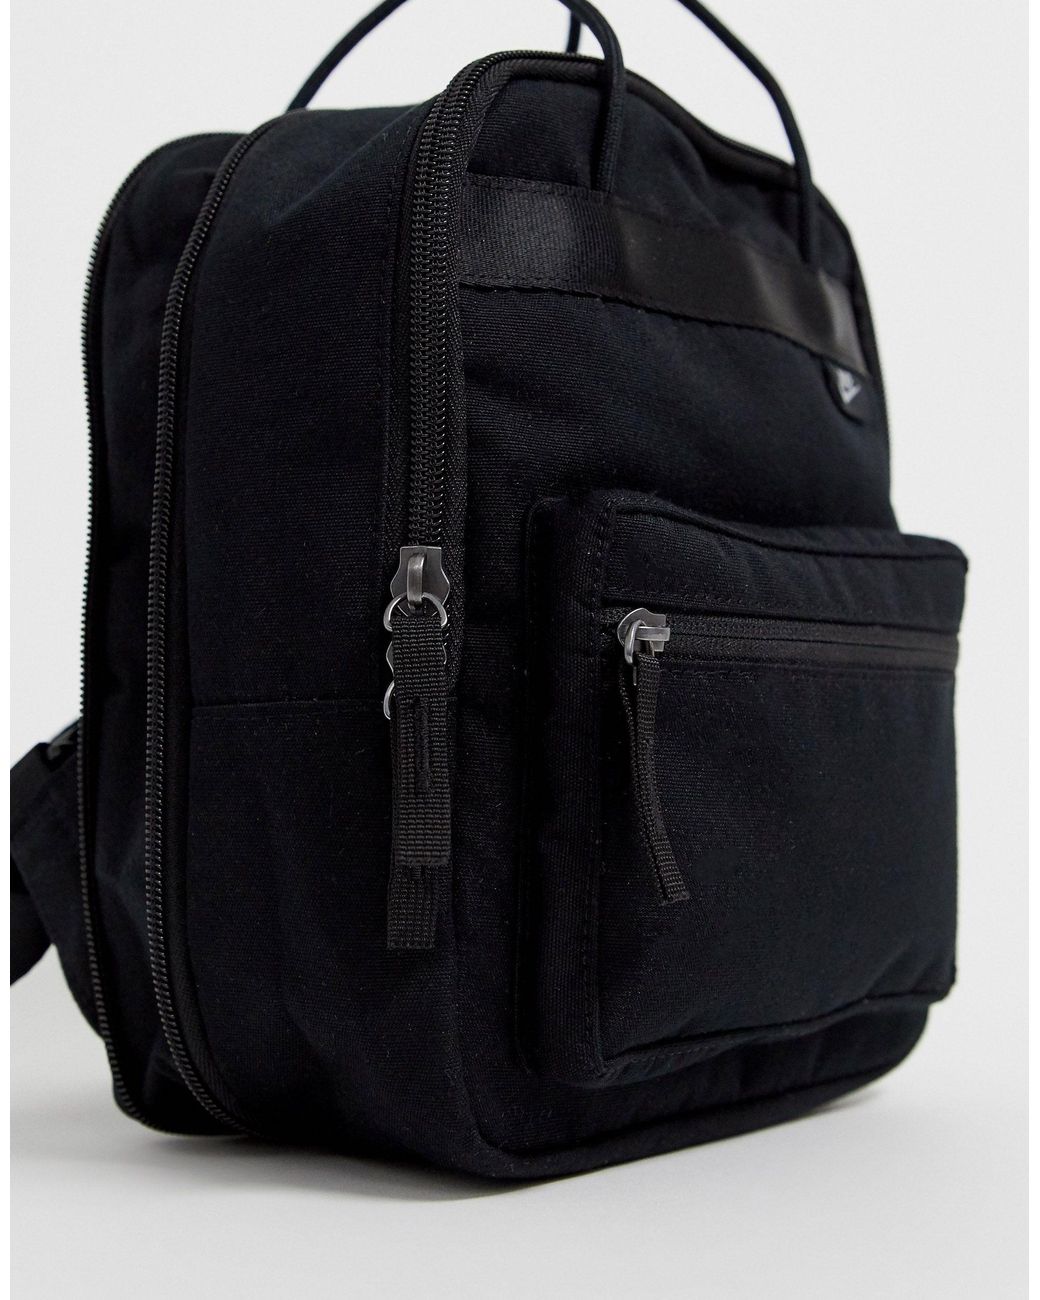 Nike Tanjun Backpack in Black | Lyst Australia